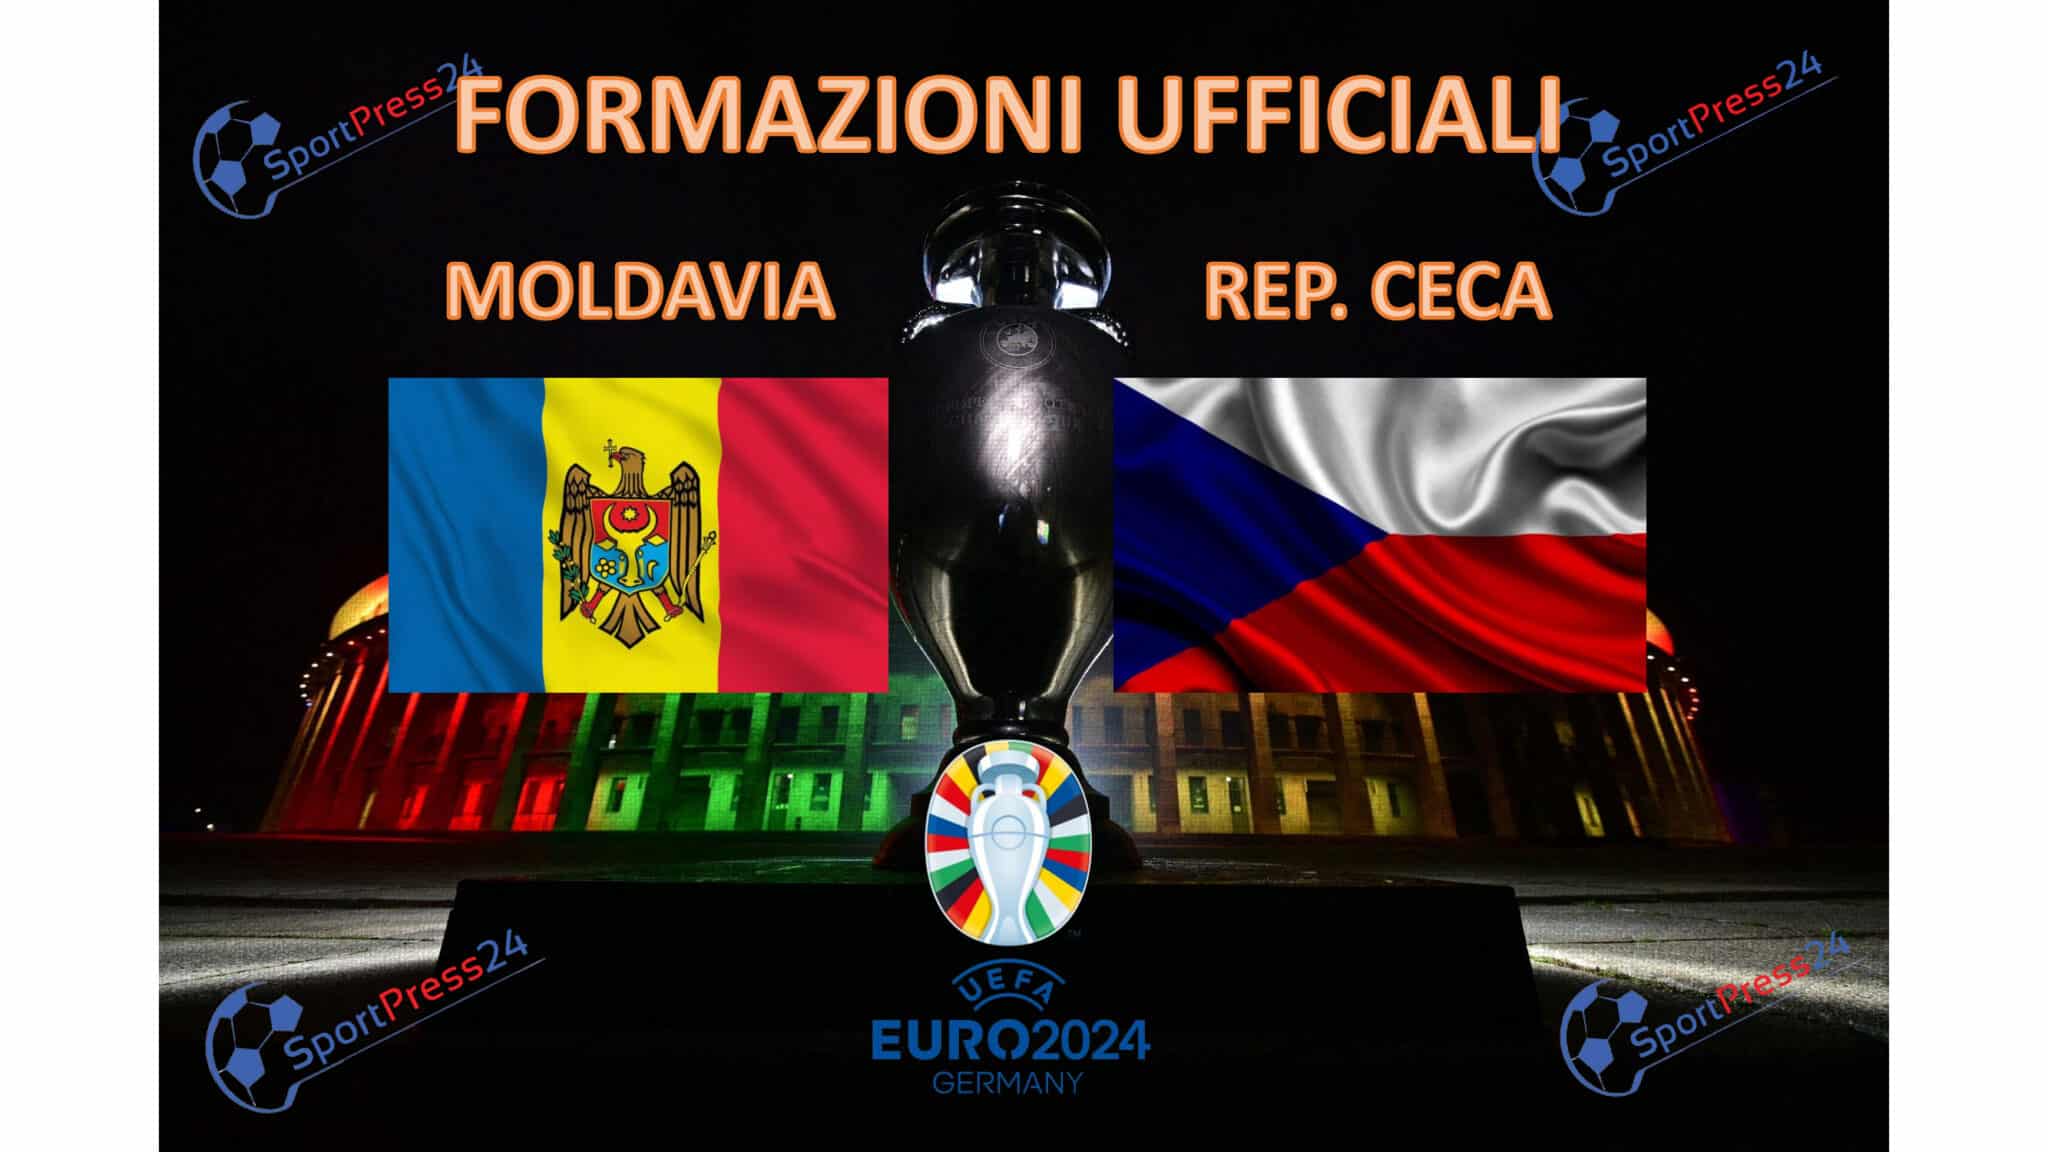 Qualificazioni Euro 2024: Moldavia-Rep. Ceca (immagine a cura di Valerio Giuseppe Bellinghieri)